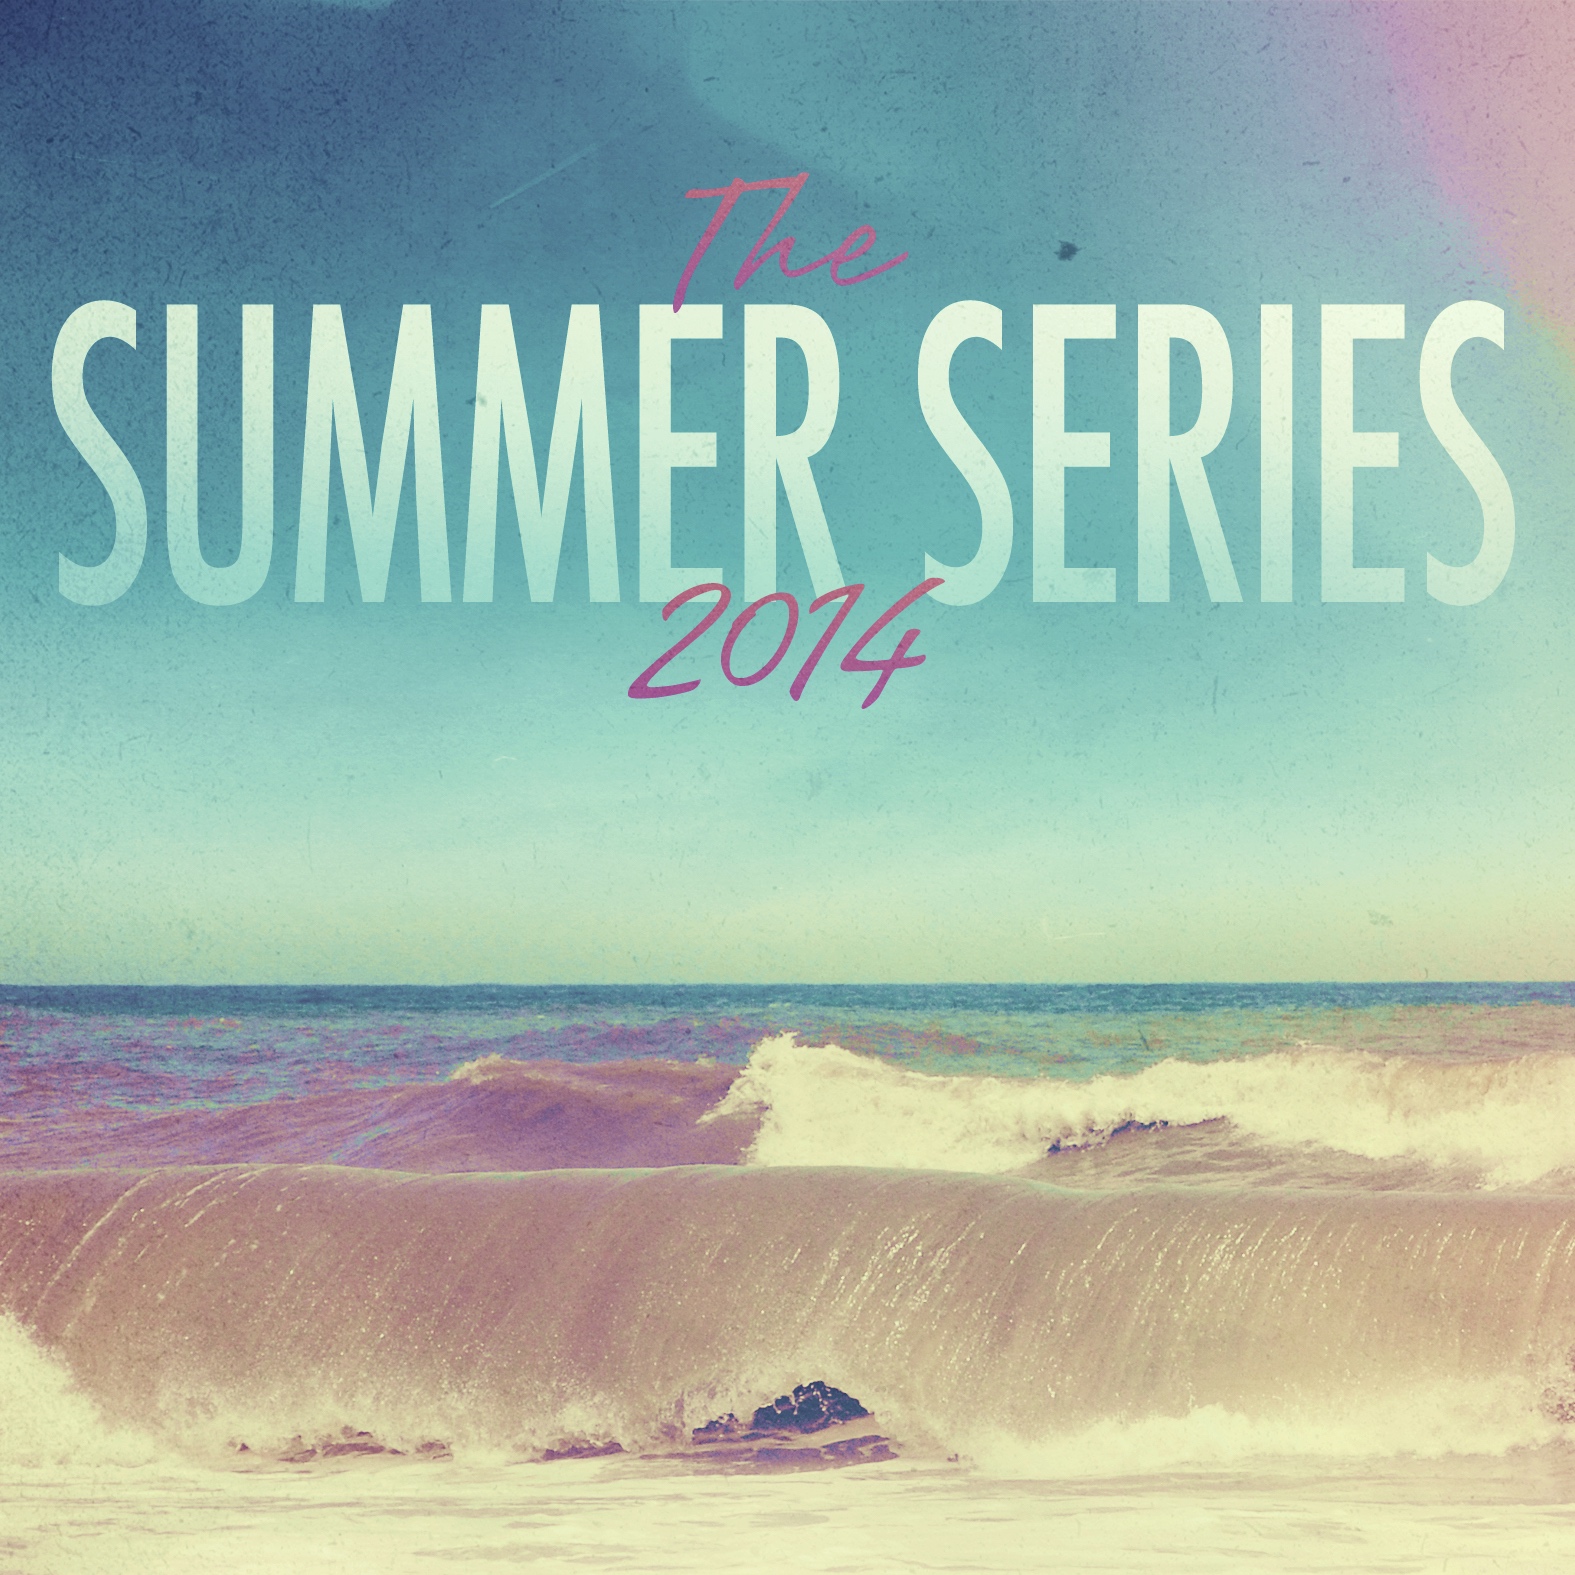 The Summer Series 2014: Reset